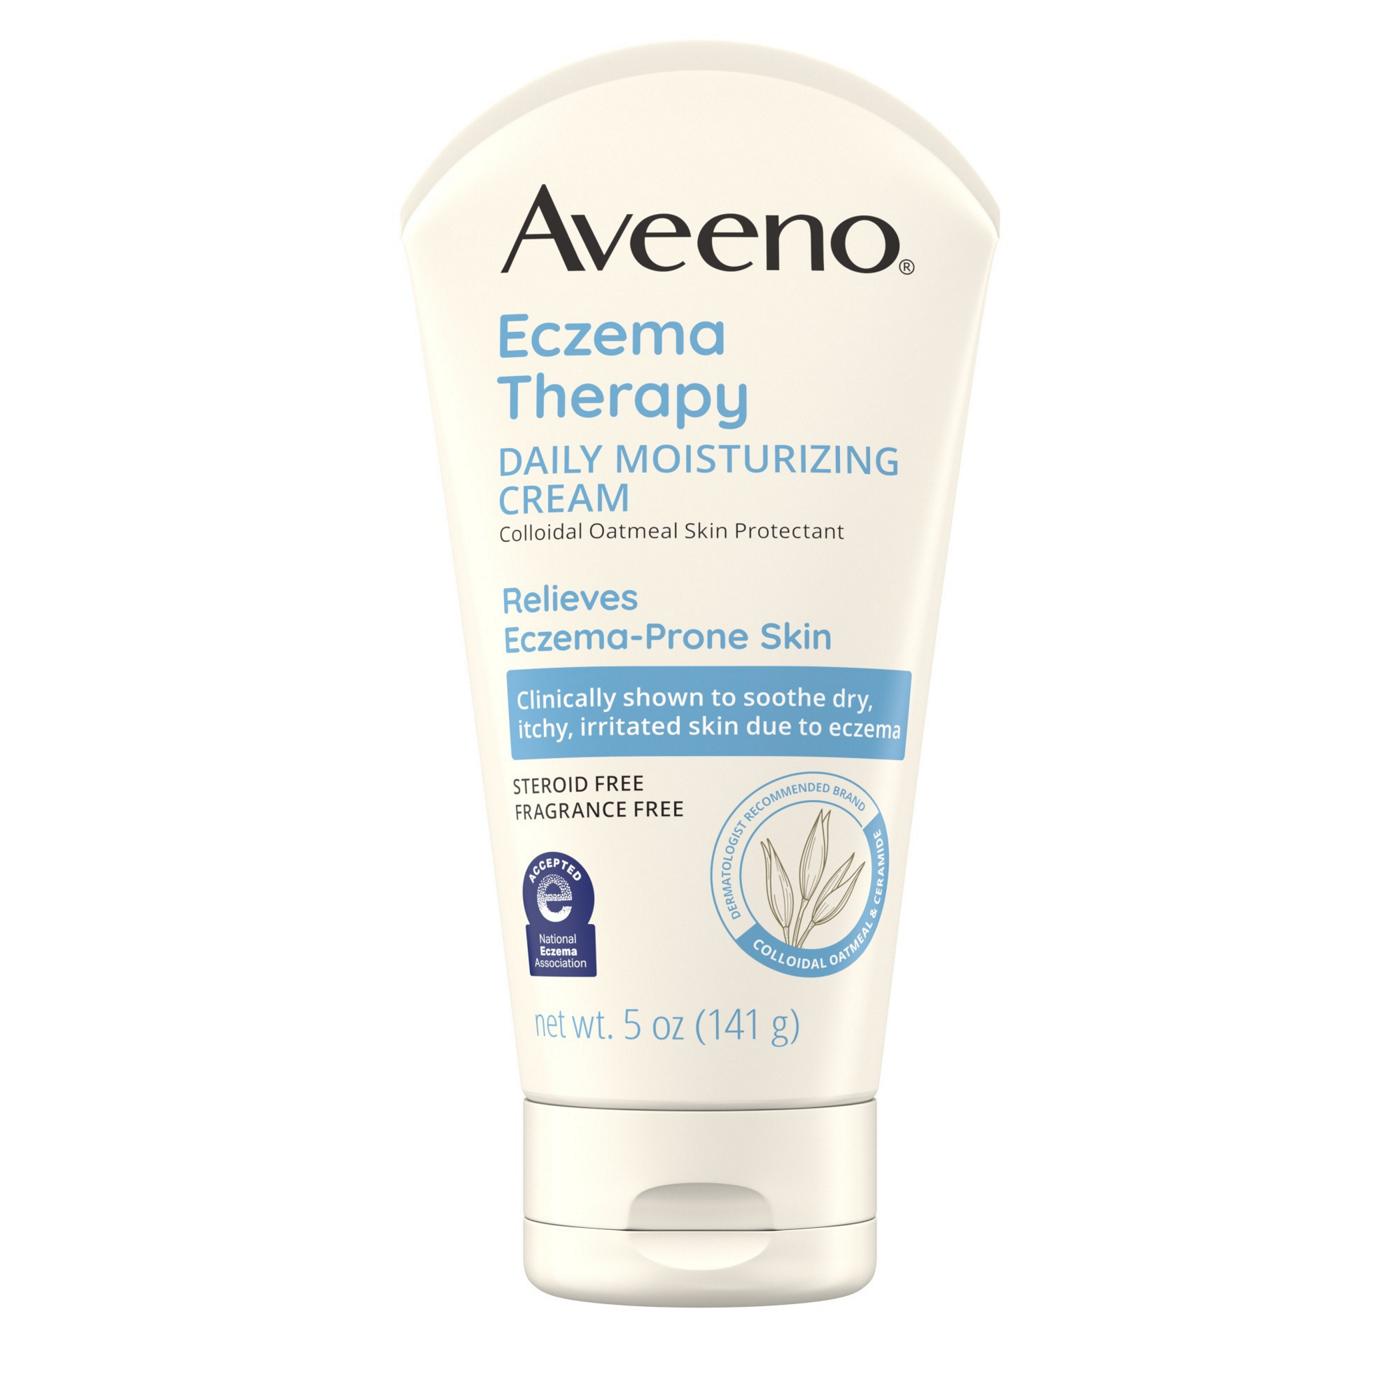 Aveeno Eczema Therapy Daily Moisturizing Cream; image 1 of 6